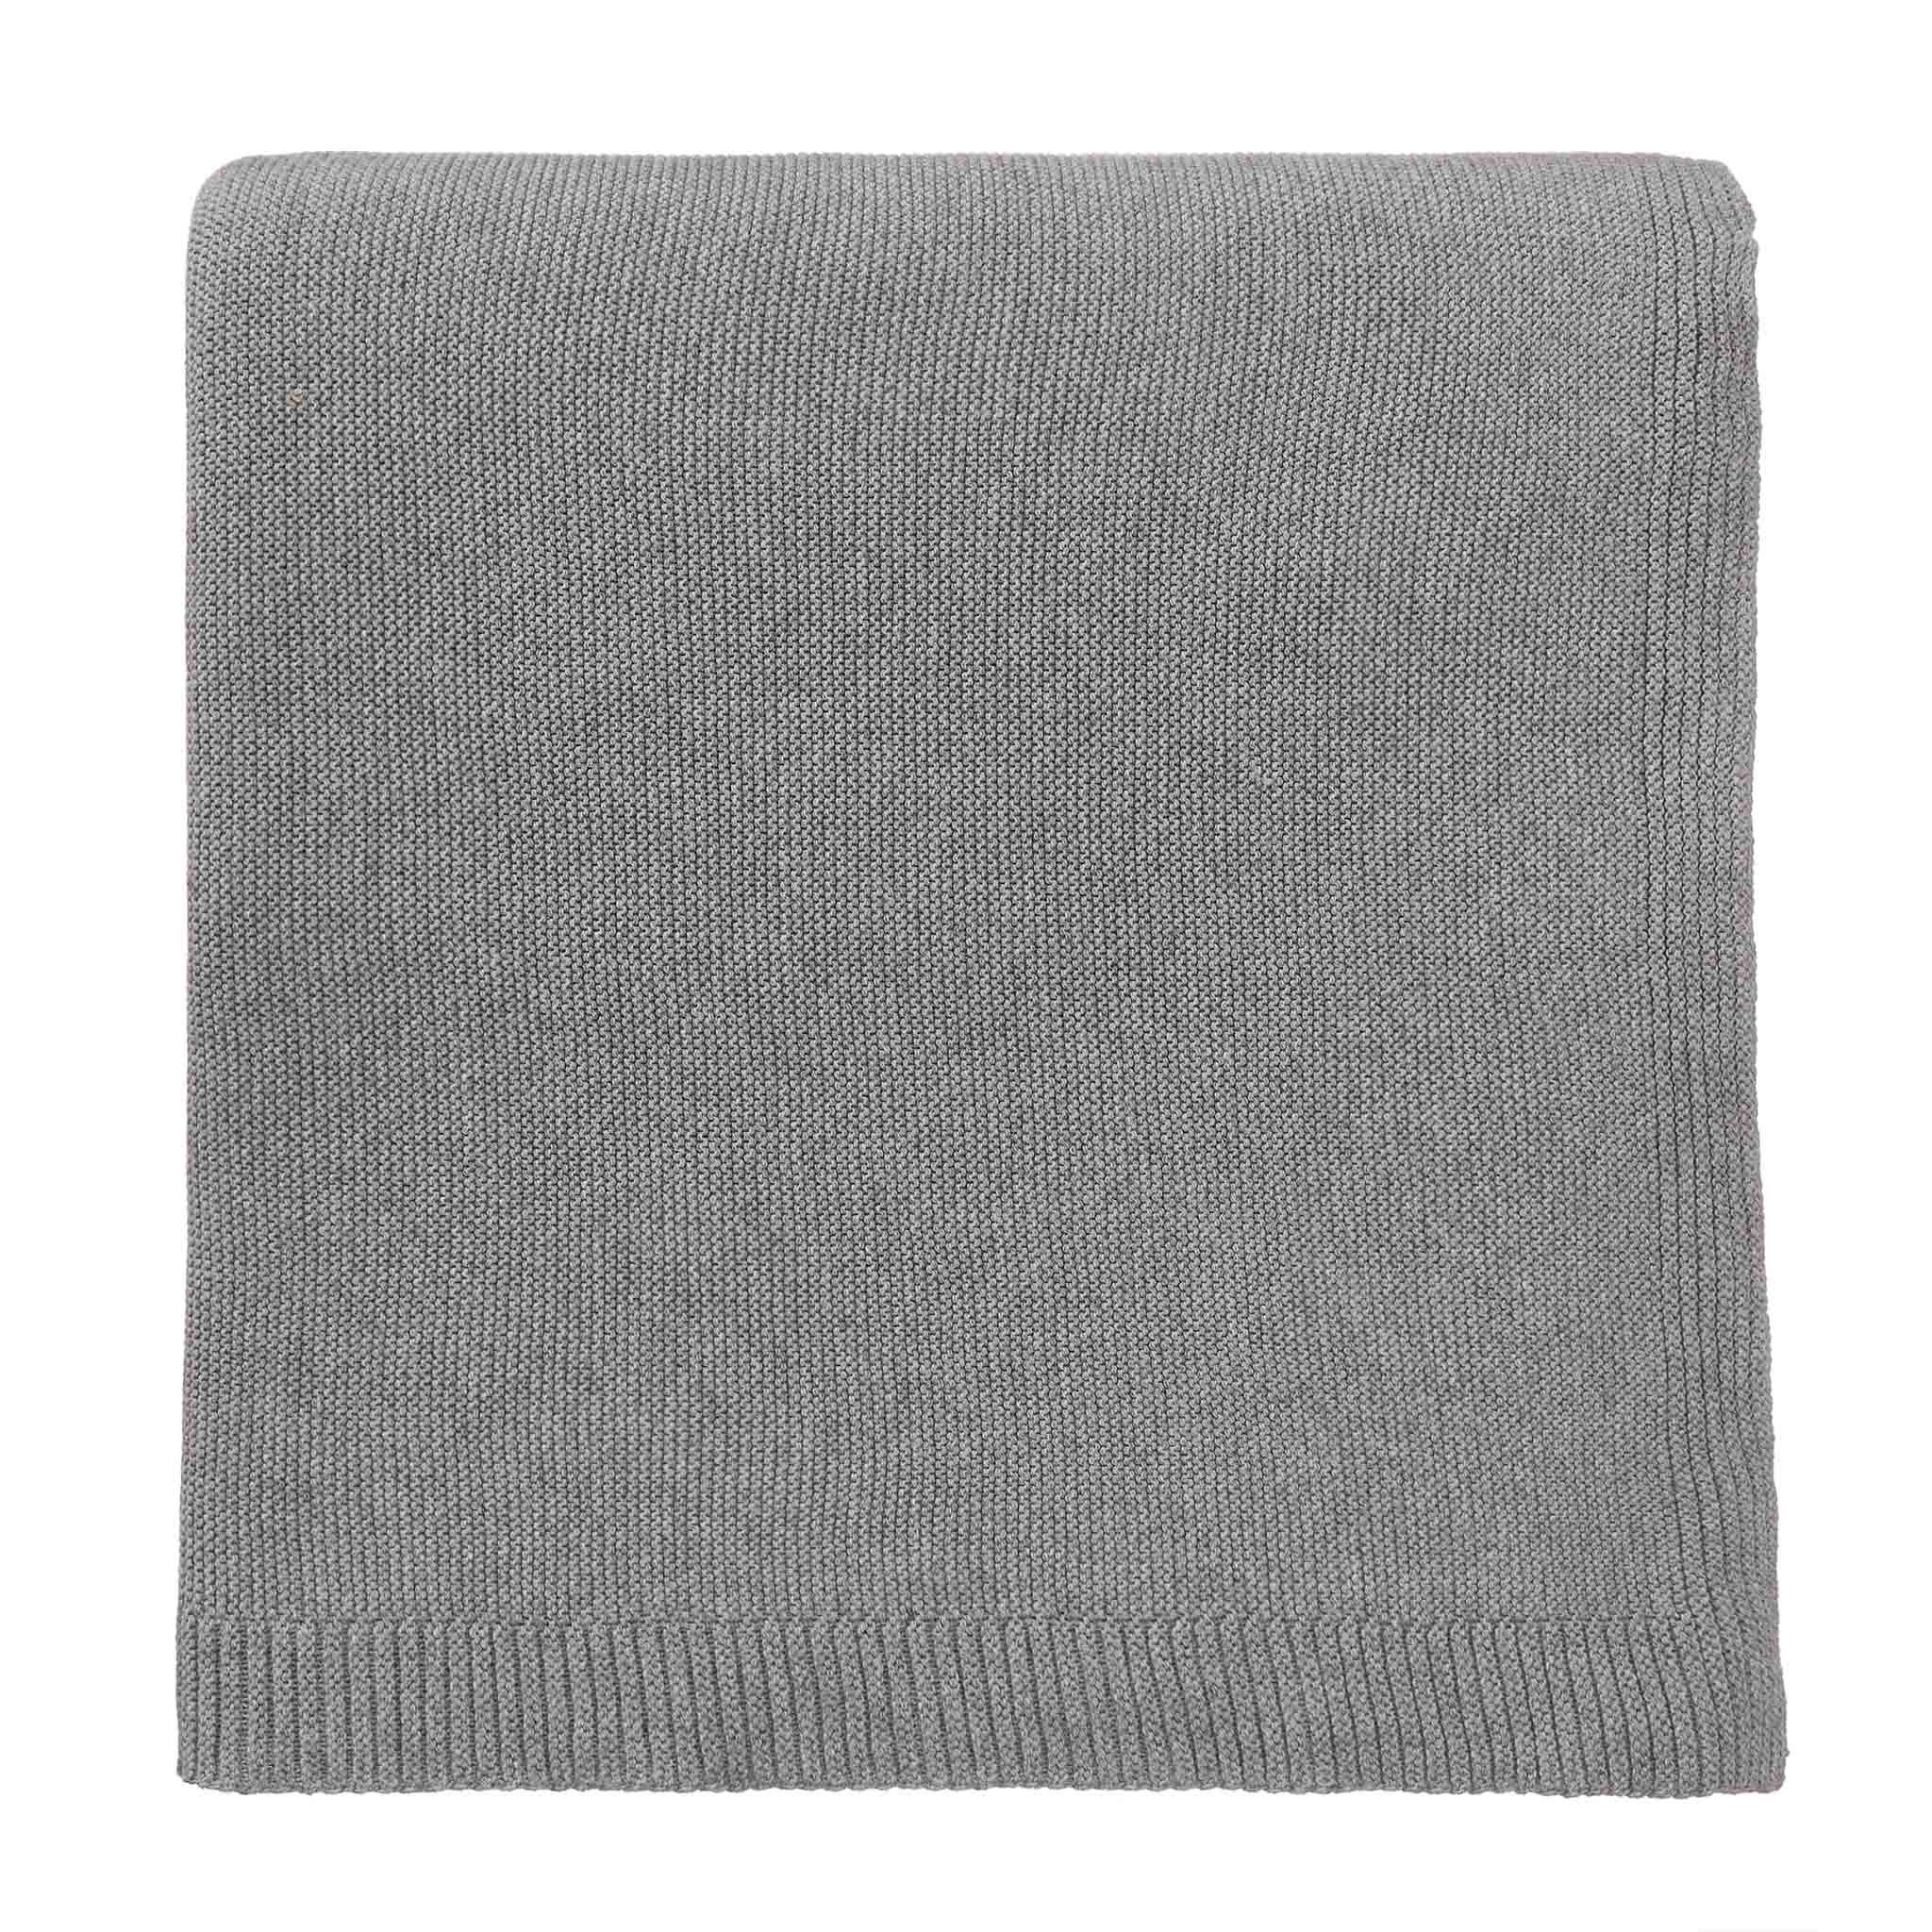 Salicos Blanket, grey melange, 100% cotton | URBANARA